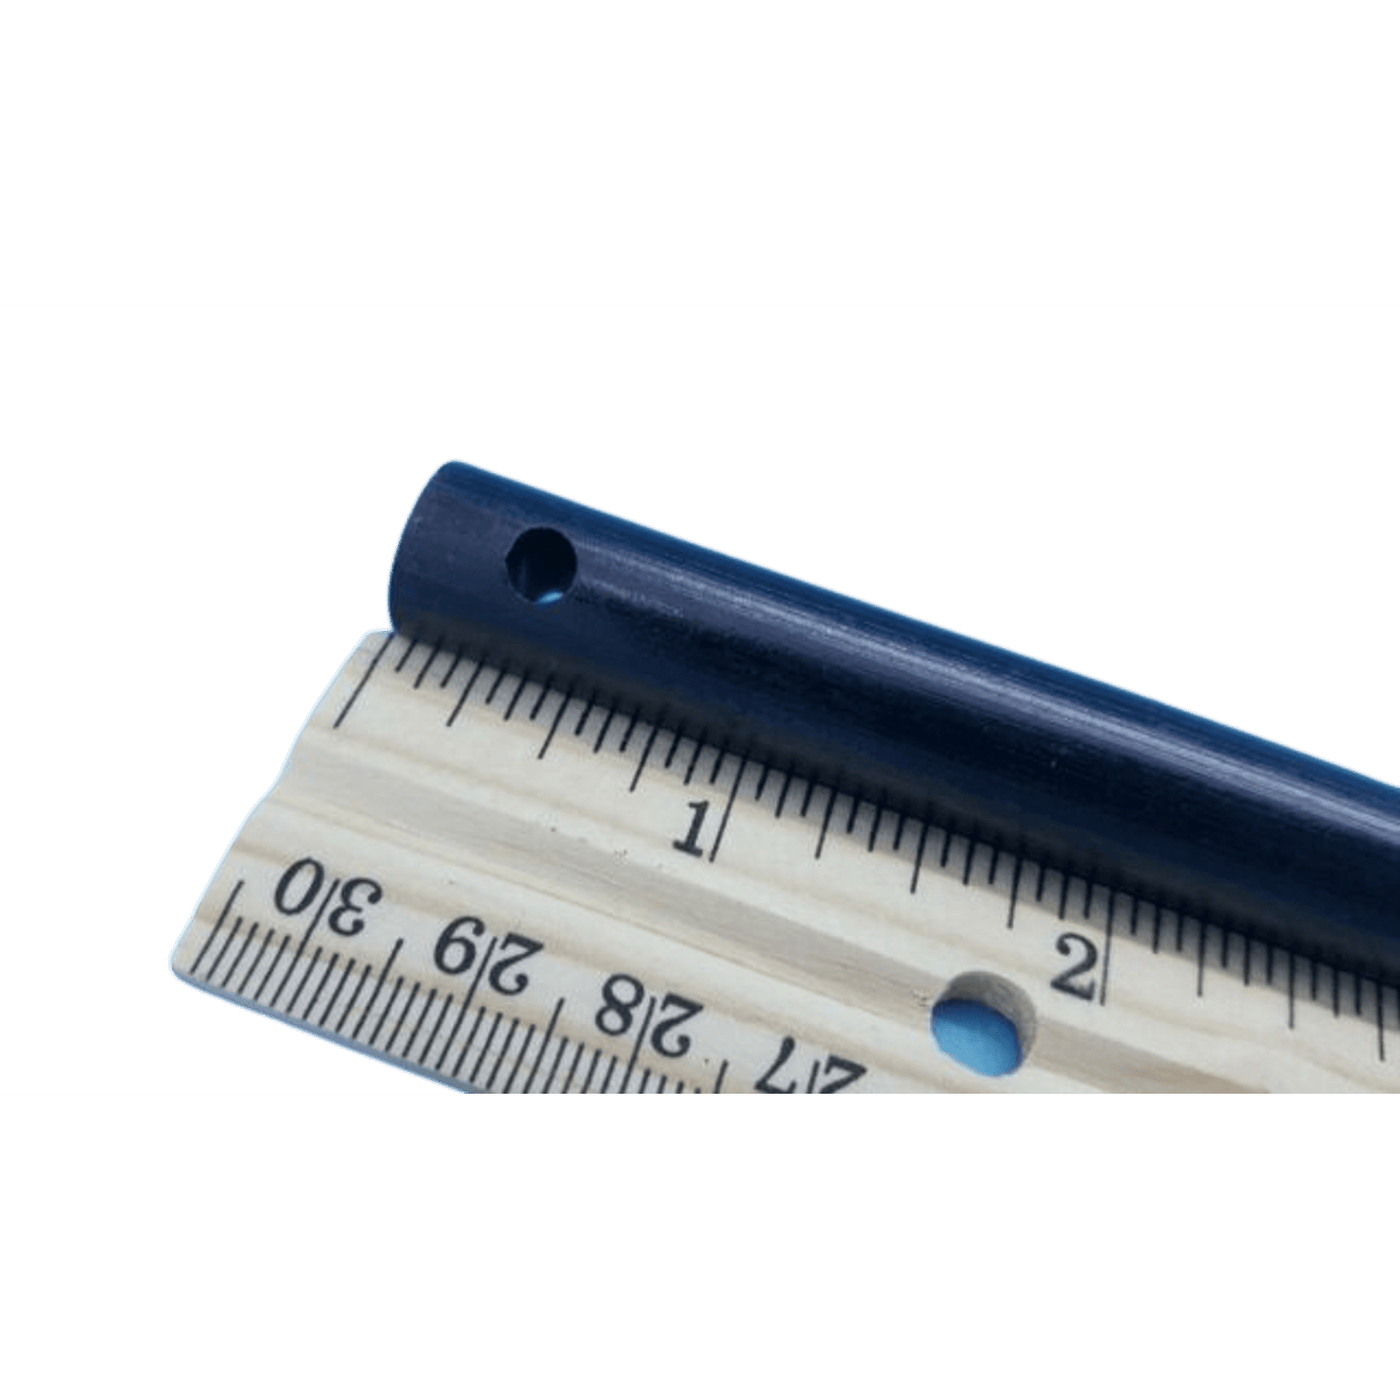 ferro rod measured